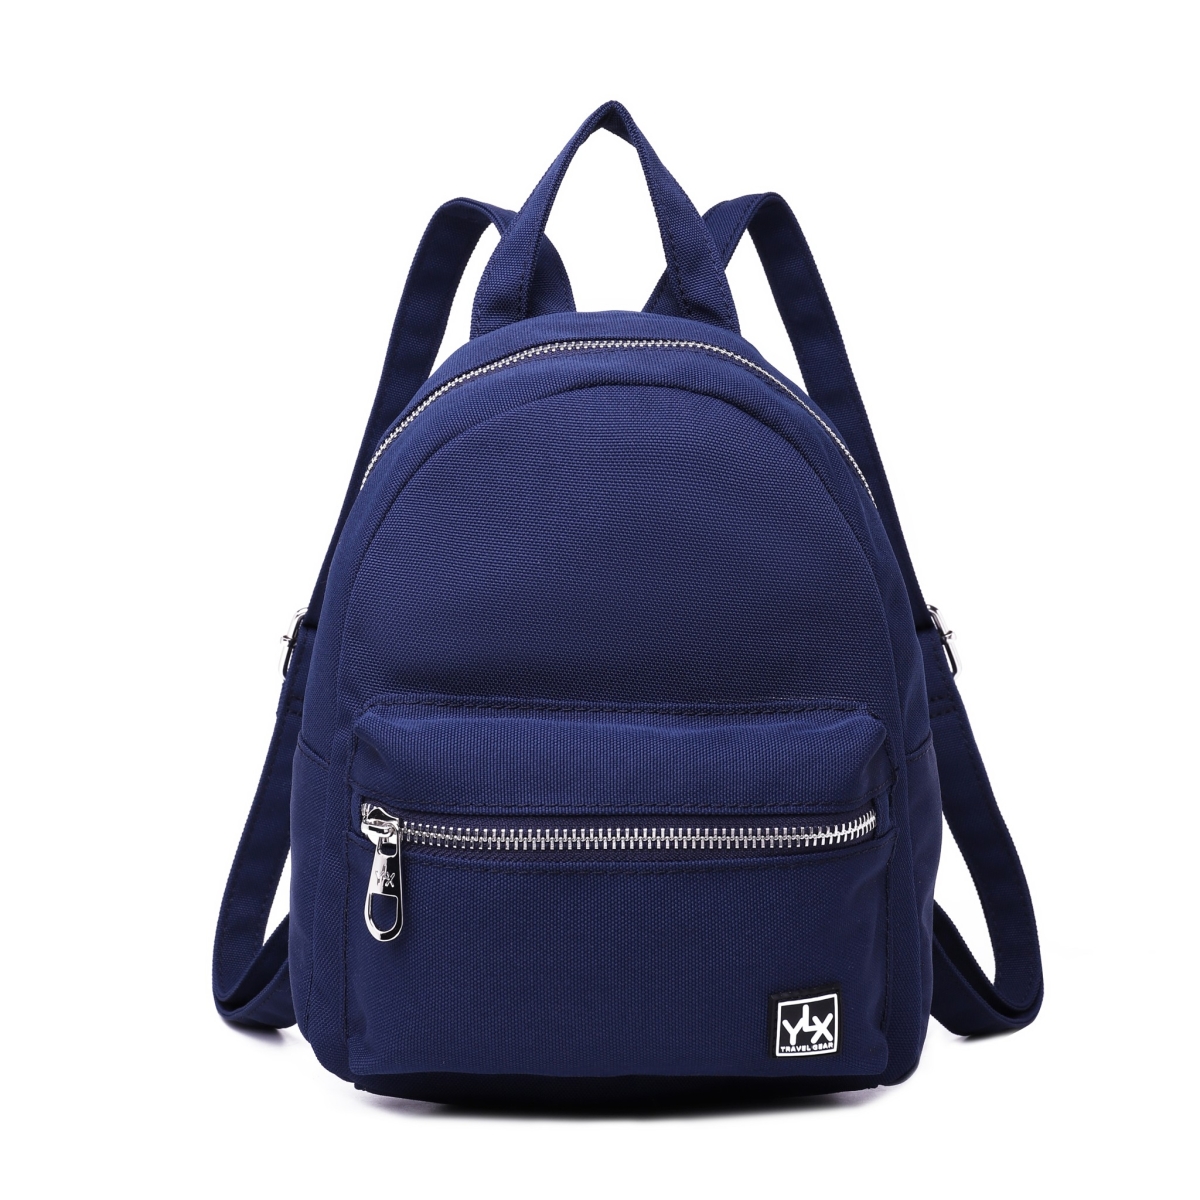 YLX Mini Backpack | Navy Blue